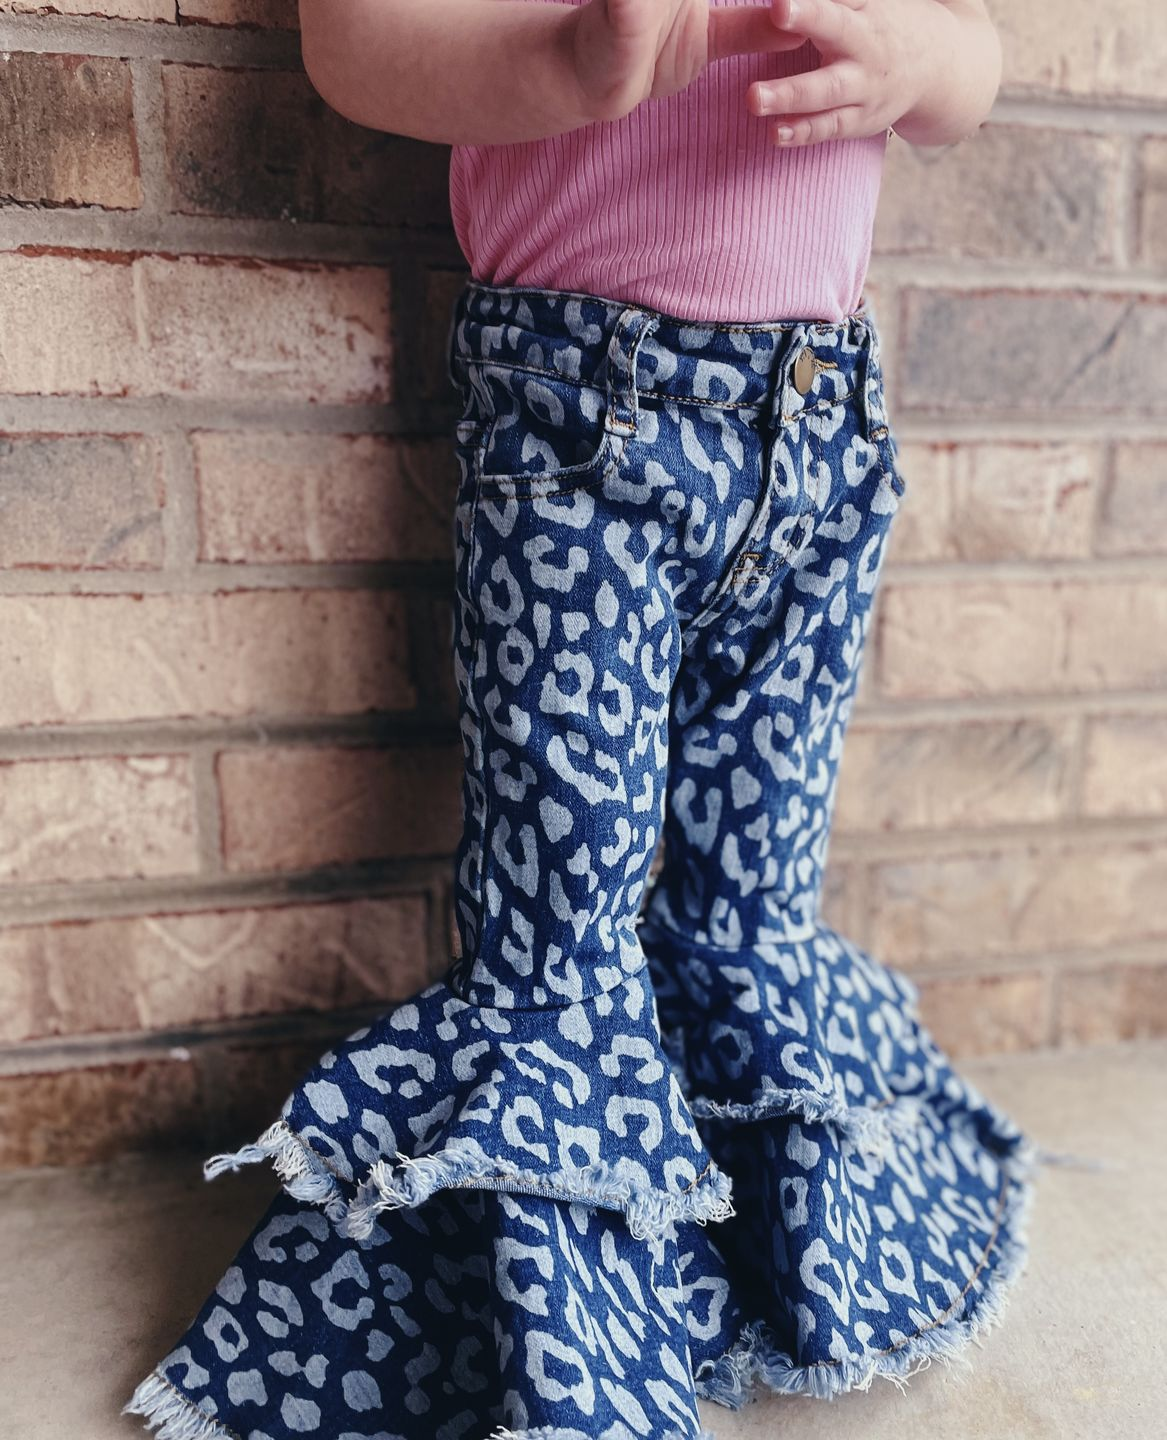 blue leopard jeans bell bottoms children girls ruffle jeans pants